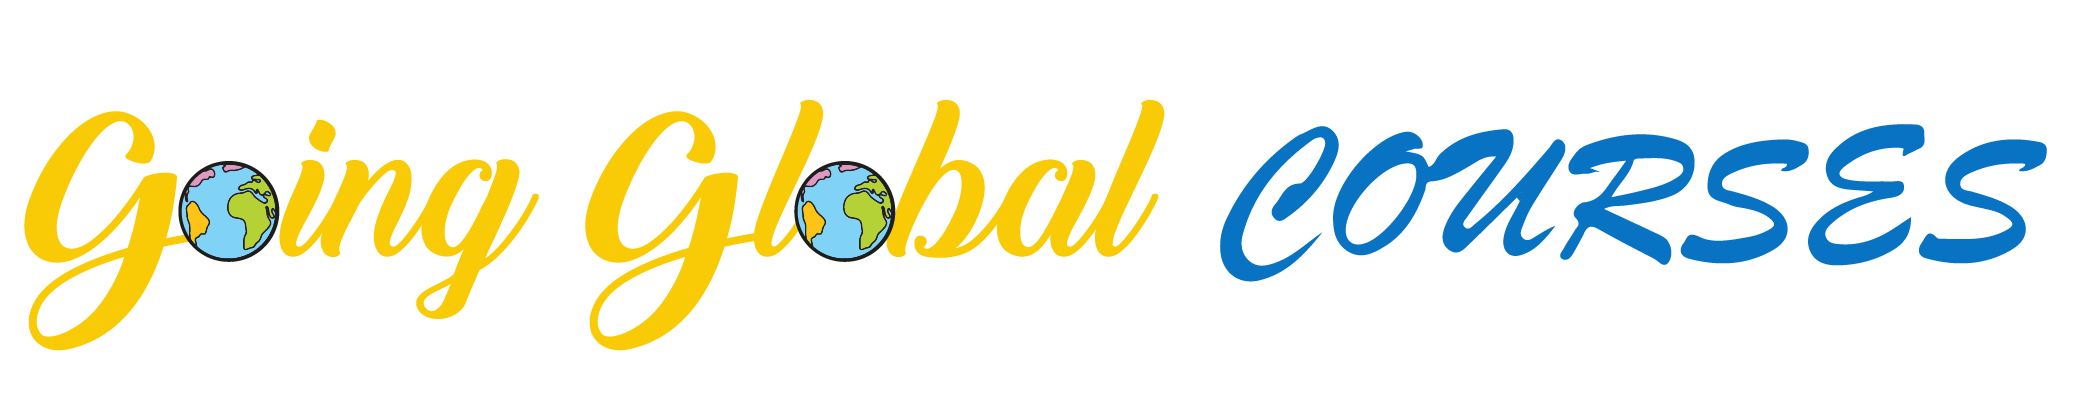 logo original 04 - Going Global Courses